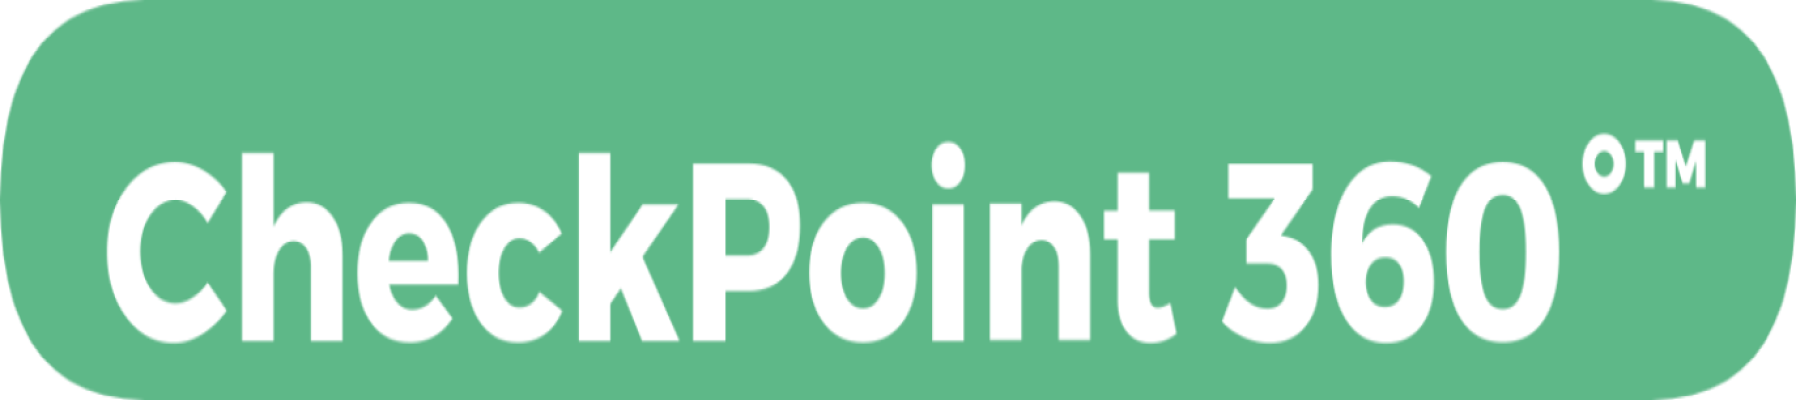 CheckPoint 360 Logo